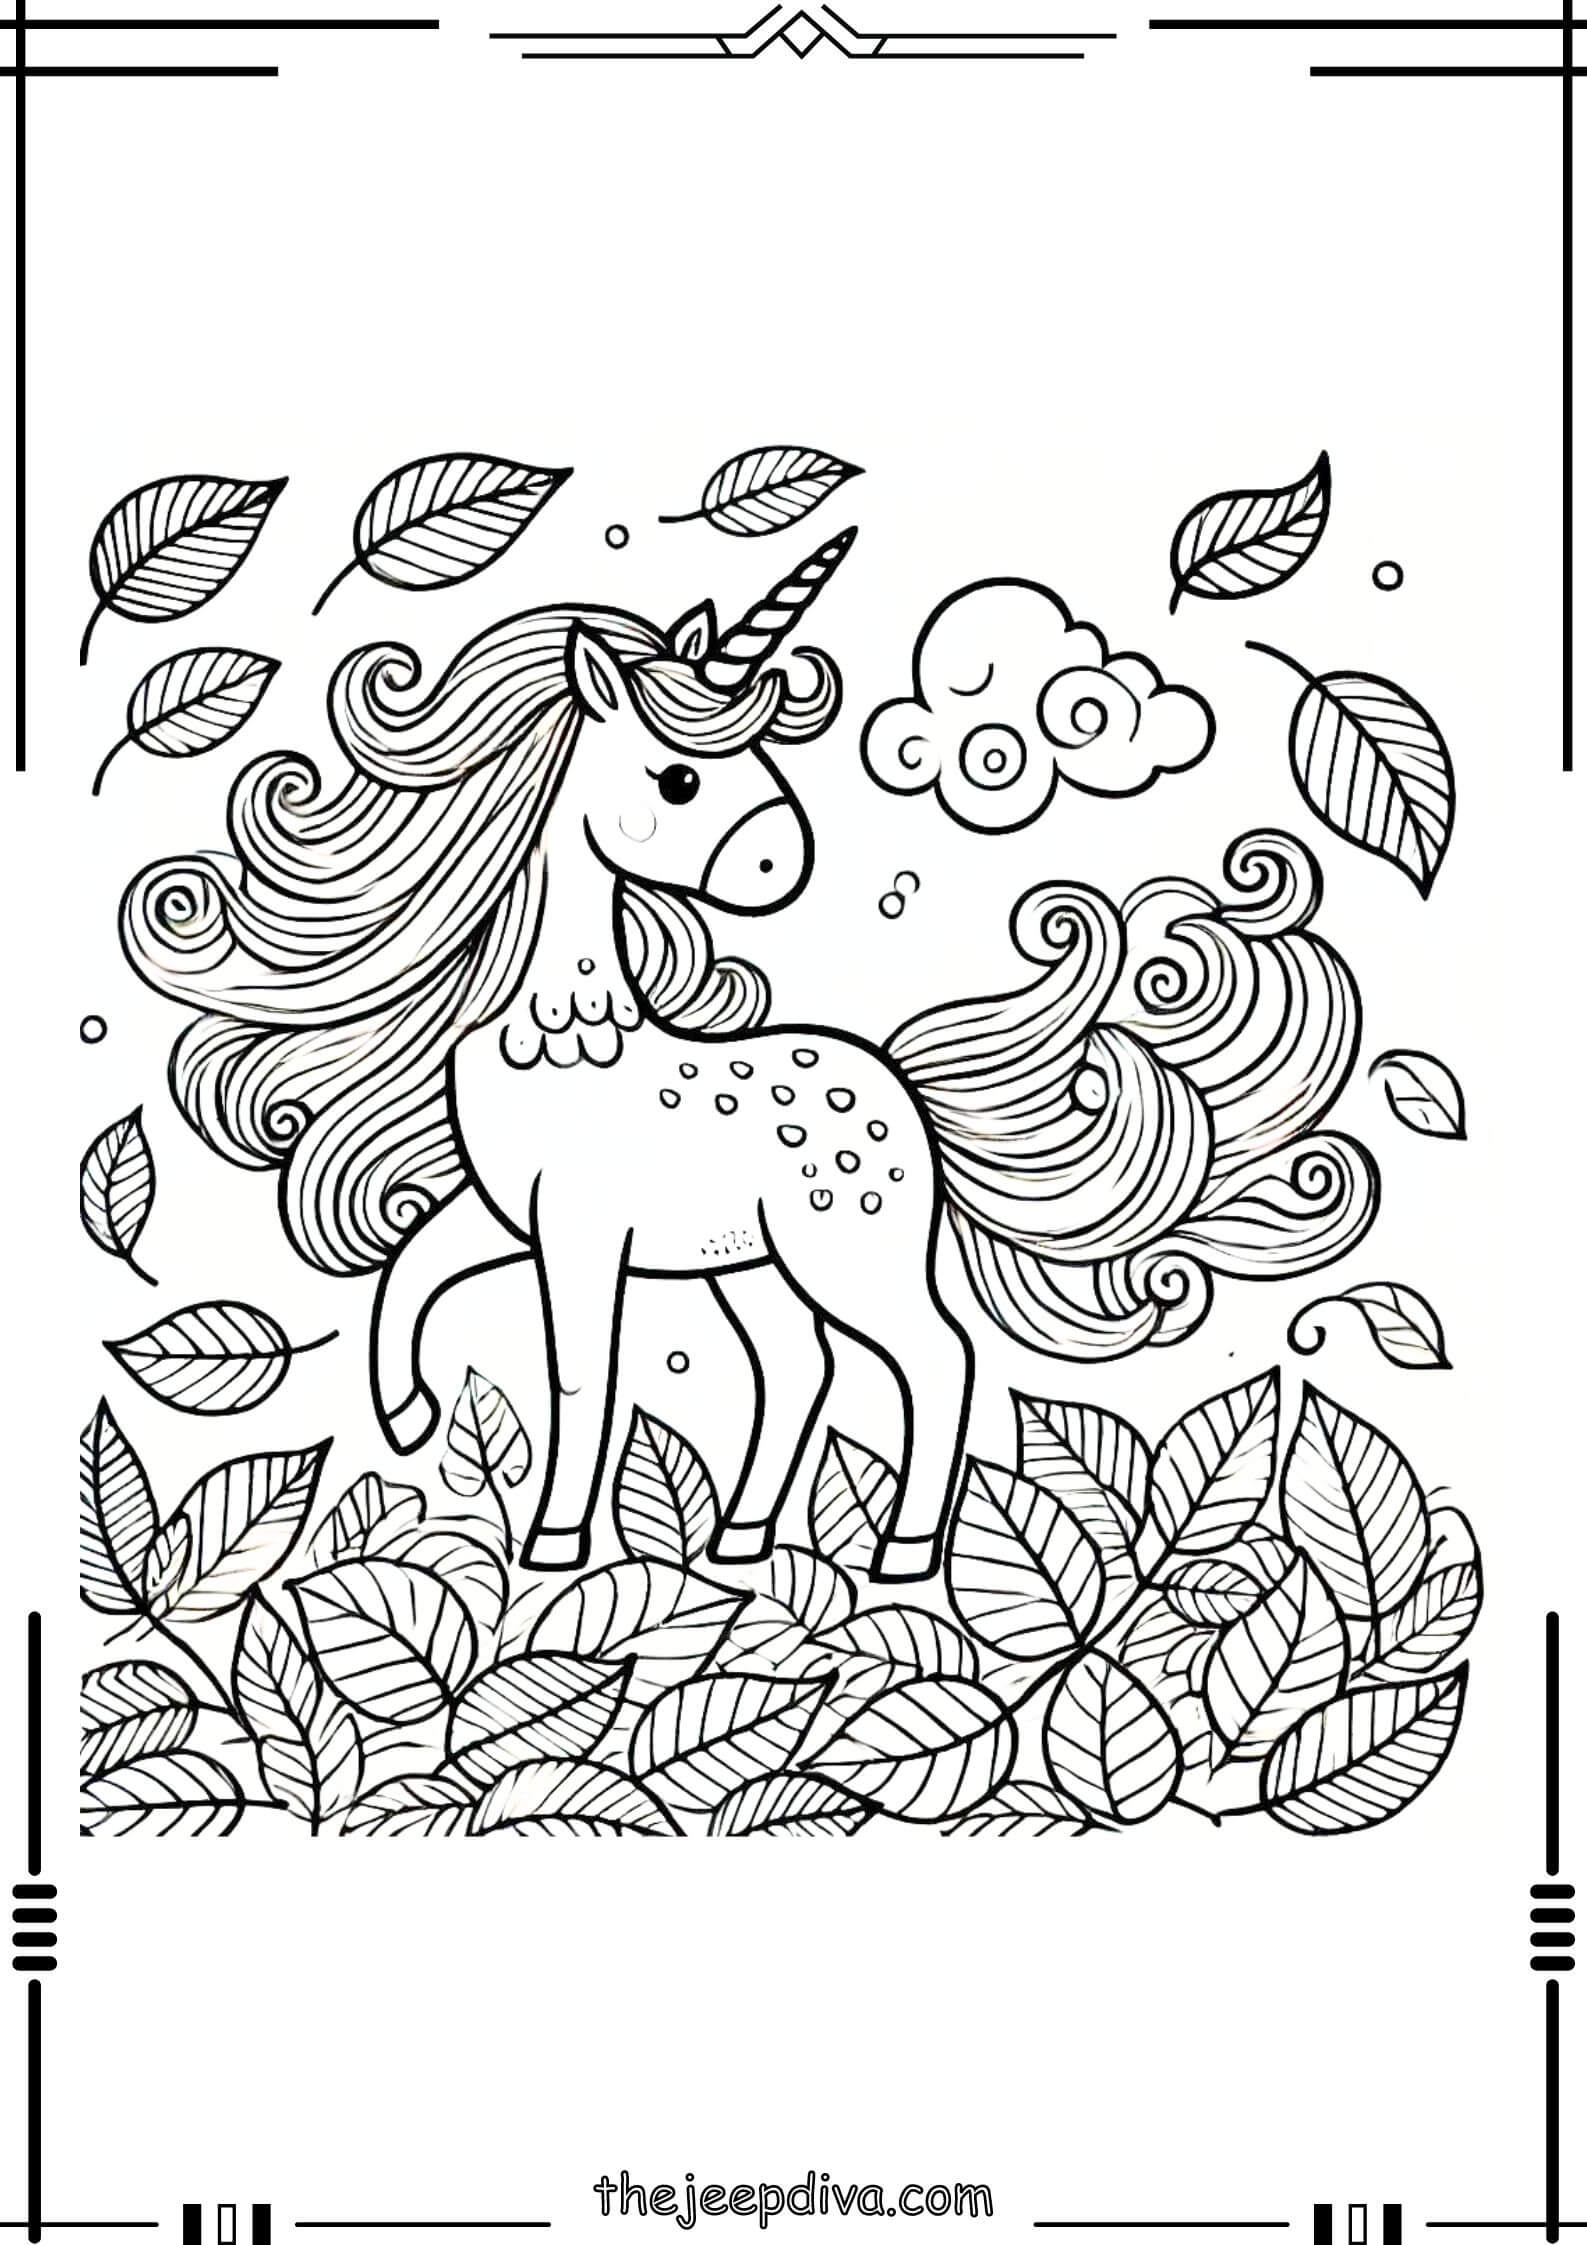 unicorn-coloring-page-medium-15